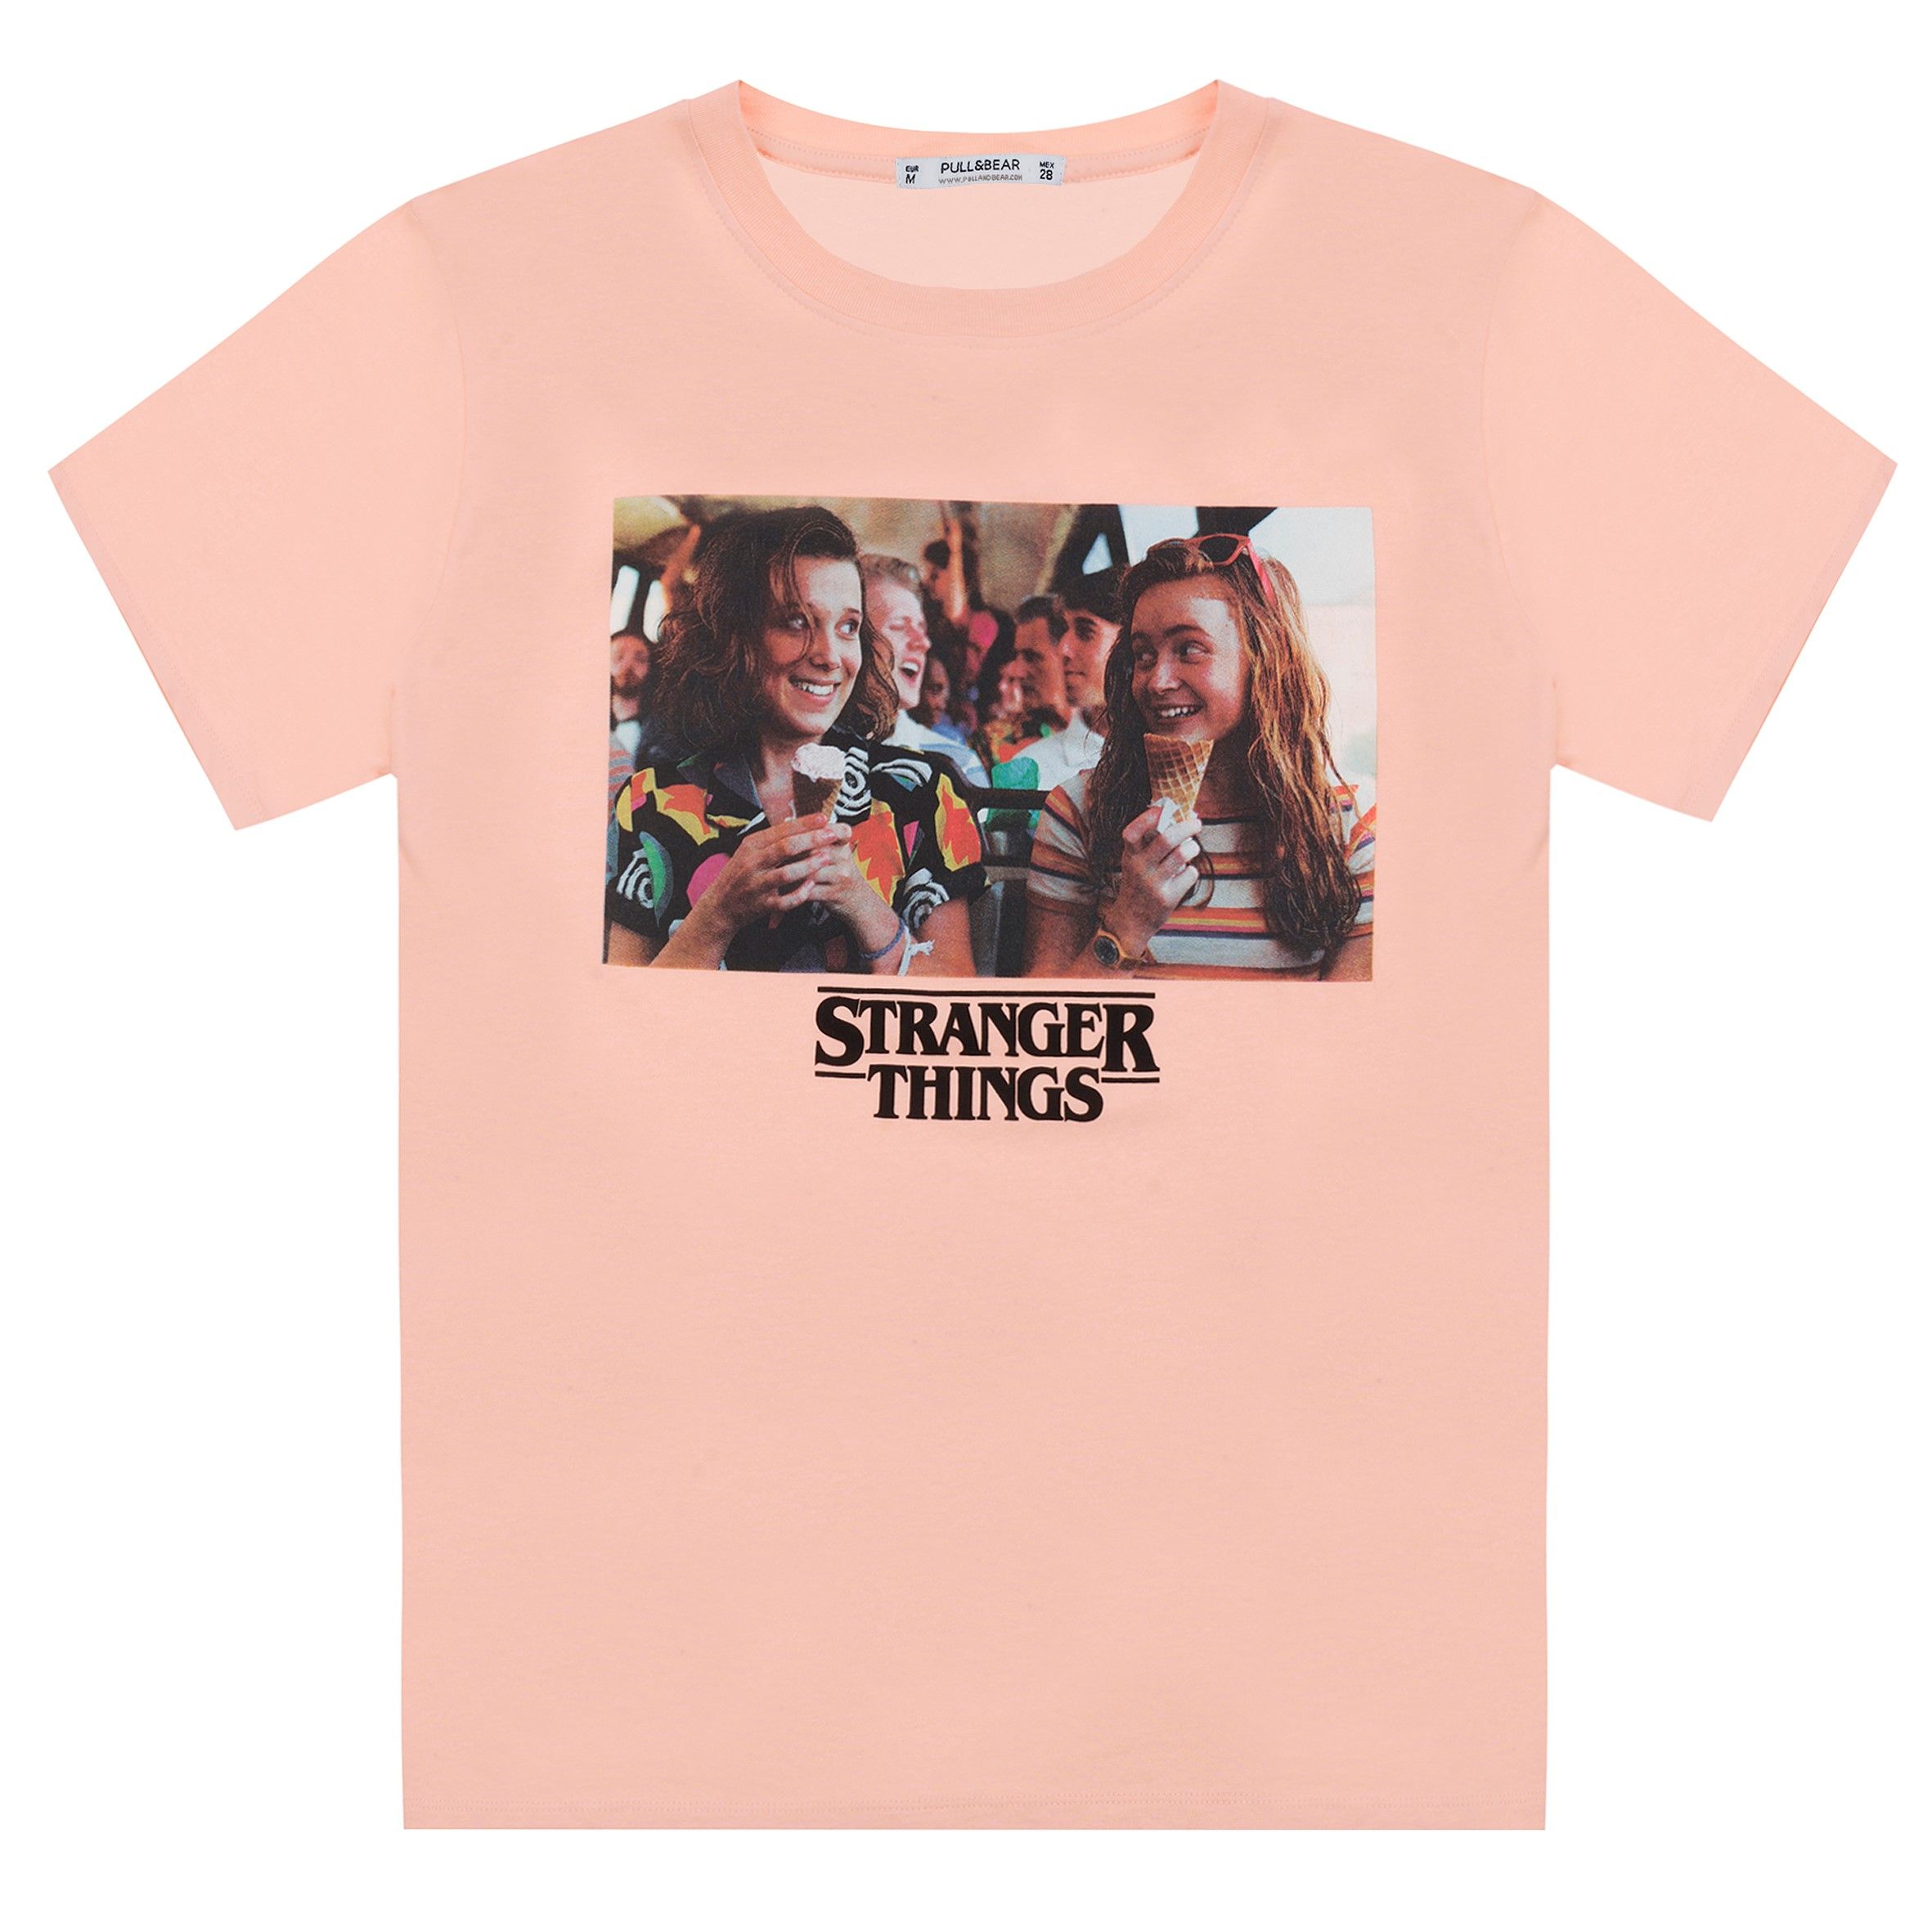 Así son las nuevas camisetas 'Stranger Things' x Pull&Bear